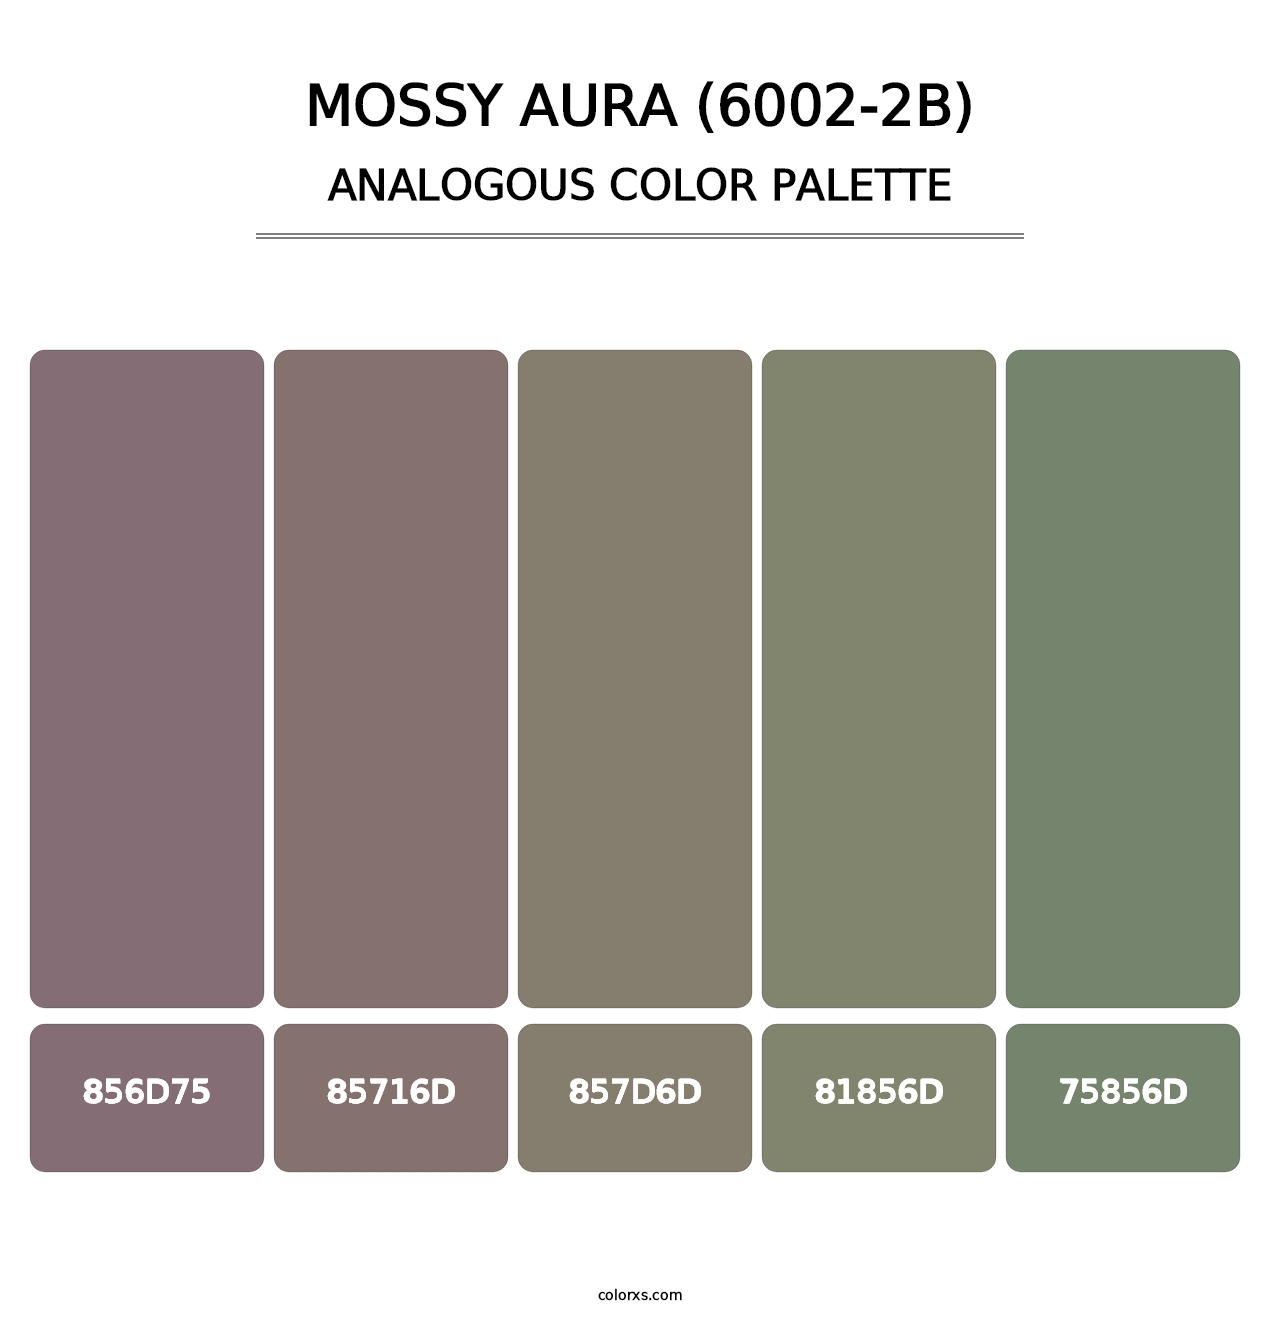 Mossy Aura (6002-2B) - Analogous Color Palette